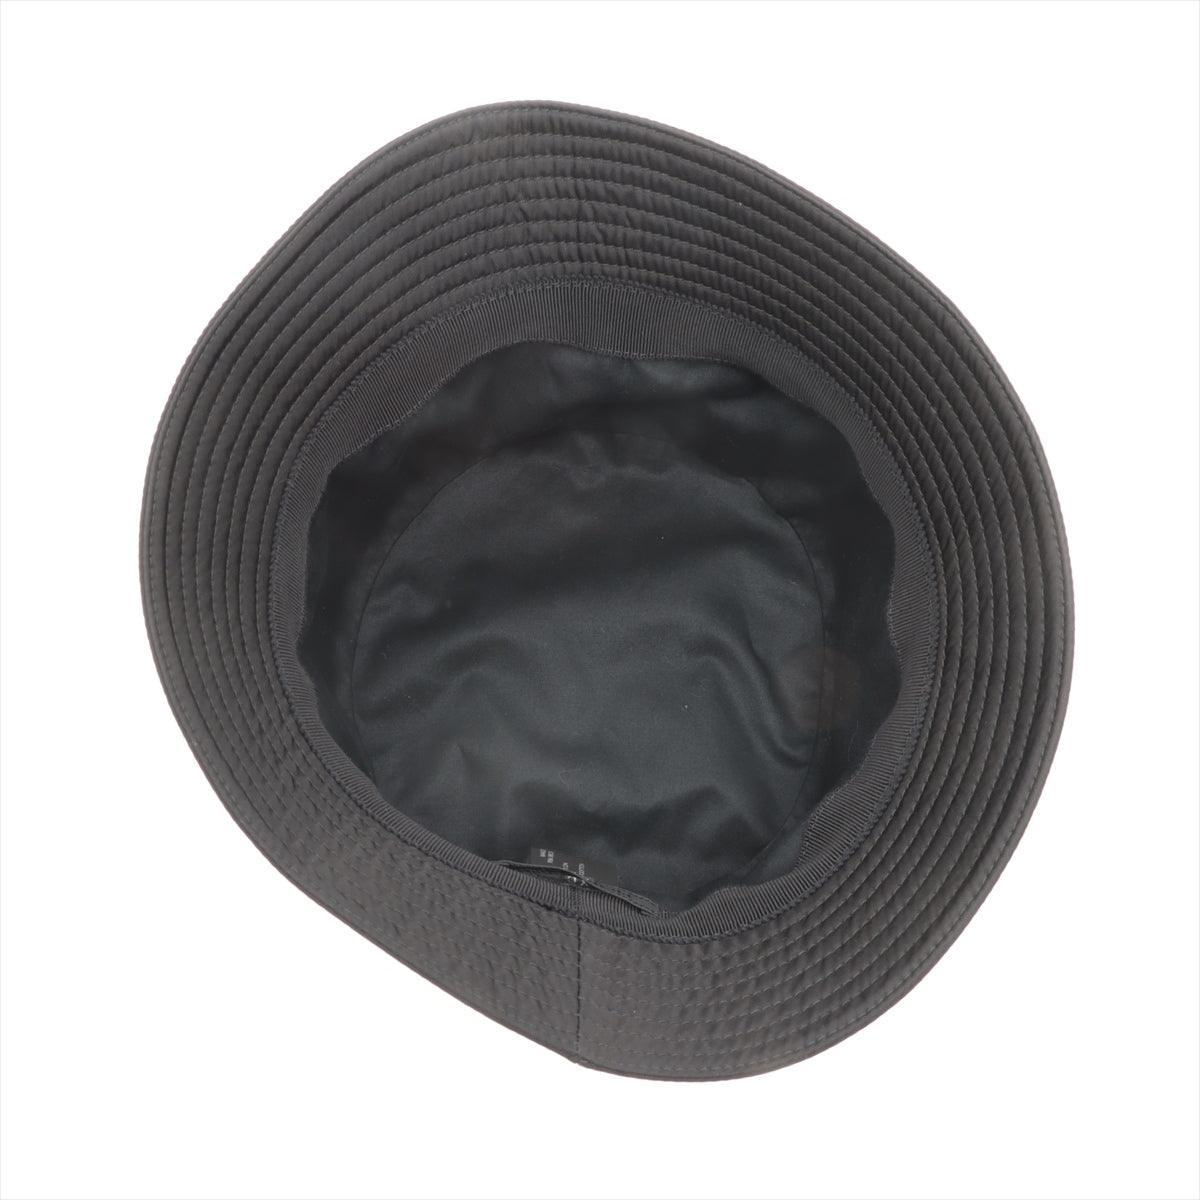 Prada 2HC137 Tessuto Hat XL Nylon Black